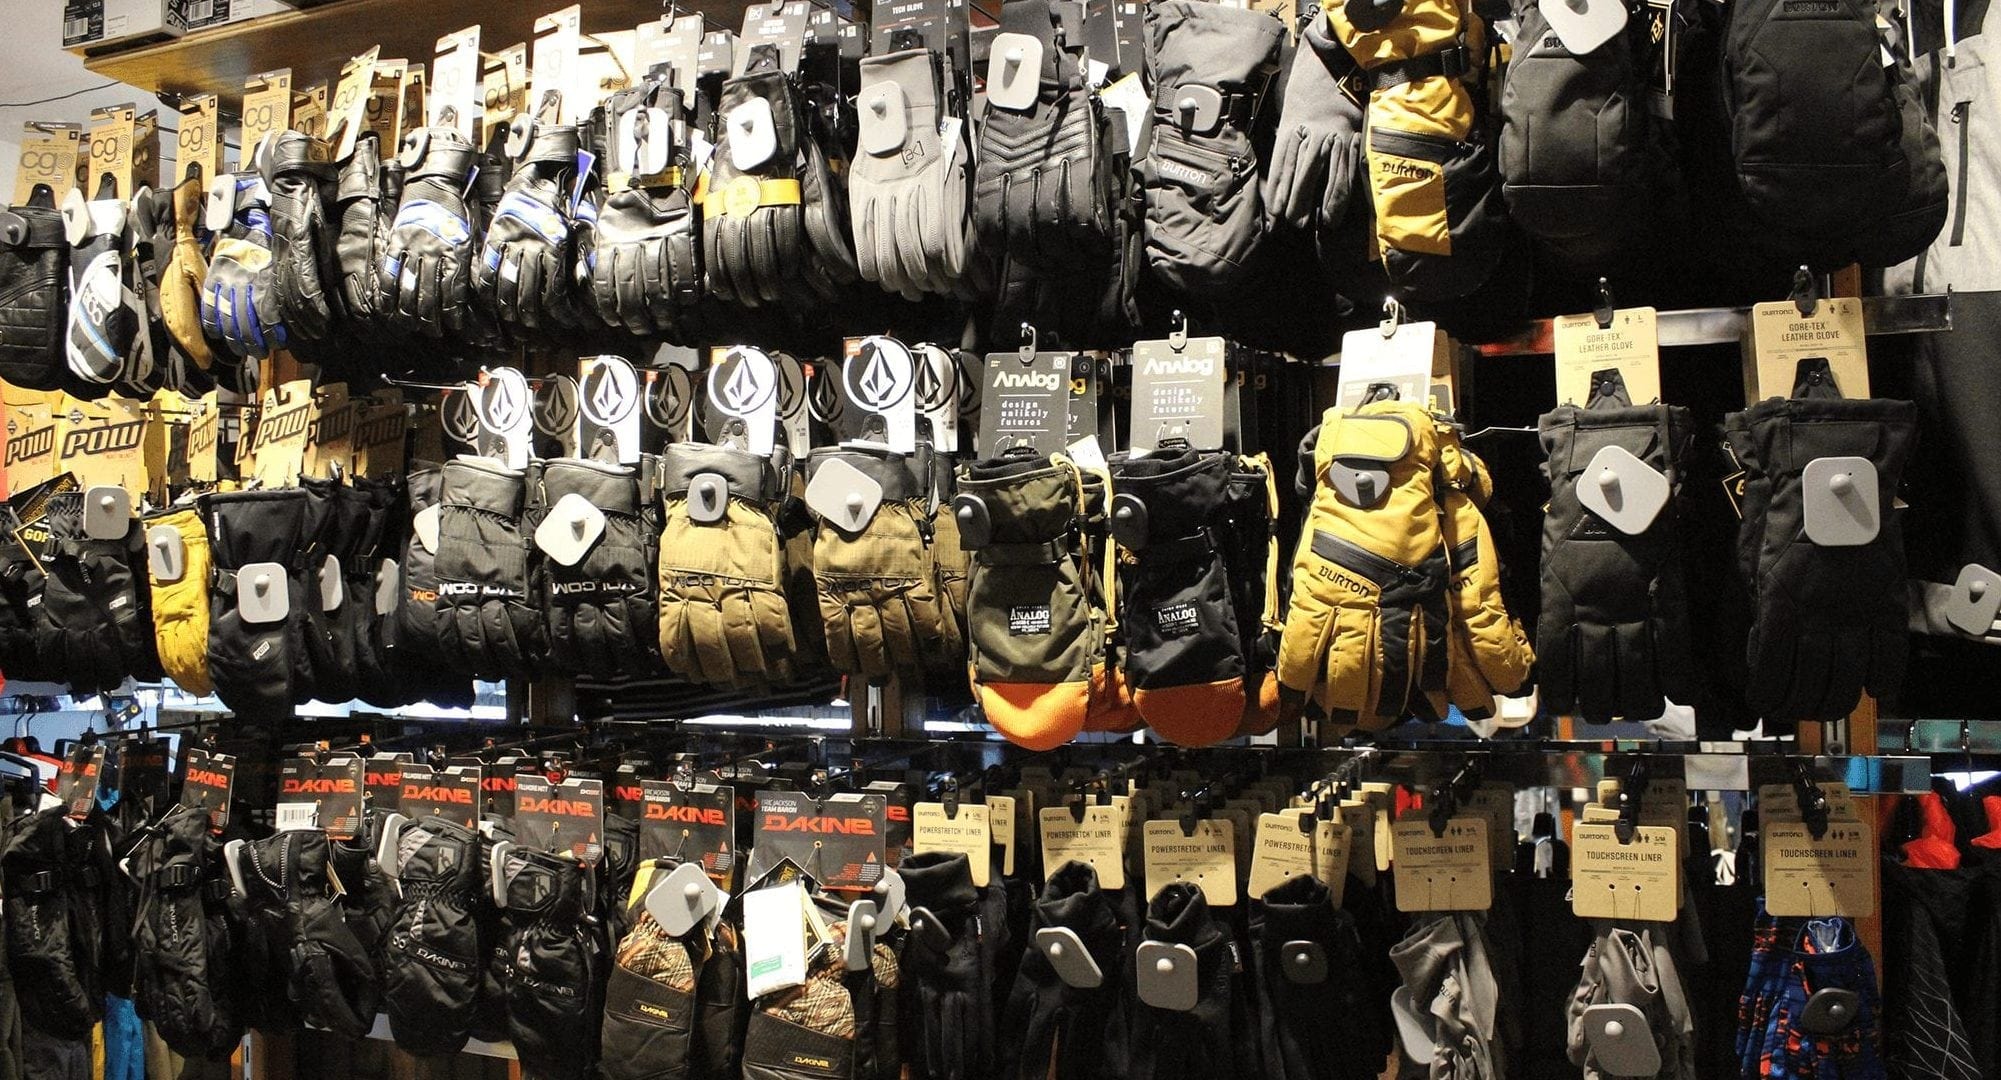 Wall of ski gloves for sale in Breckenridge